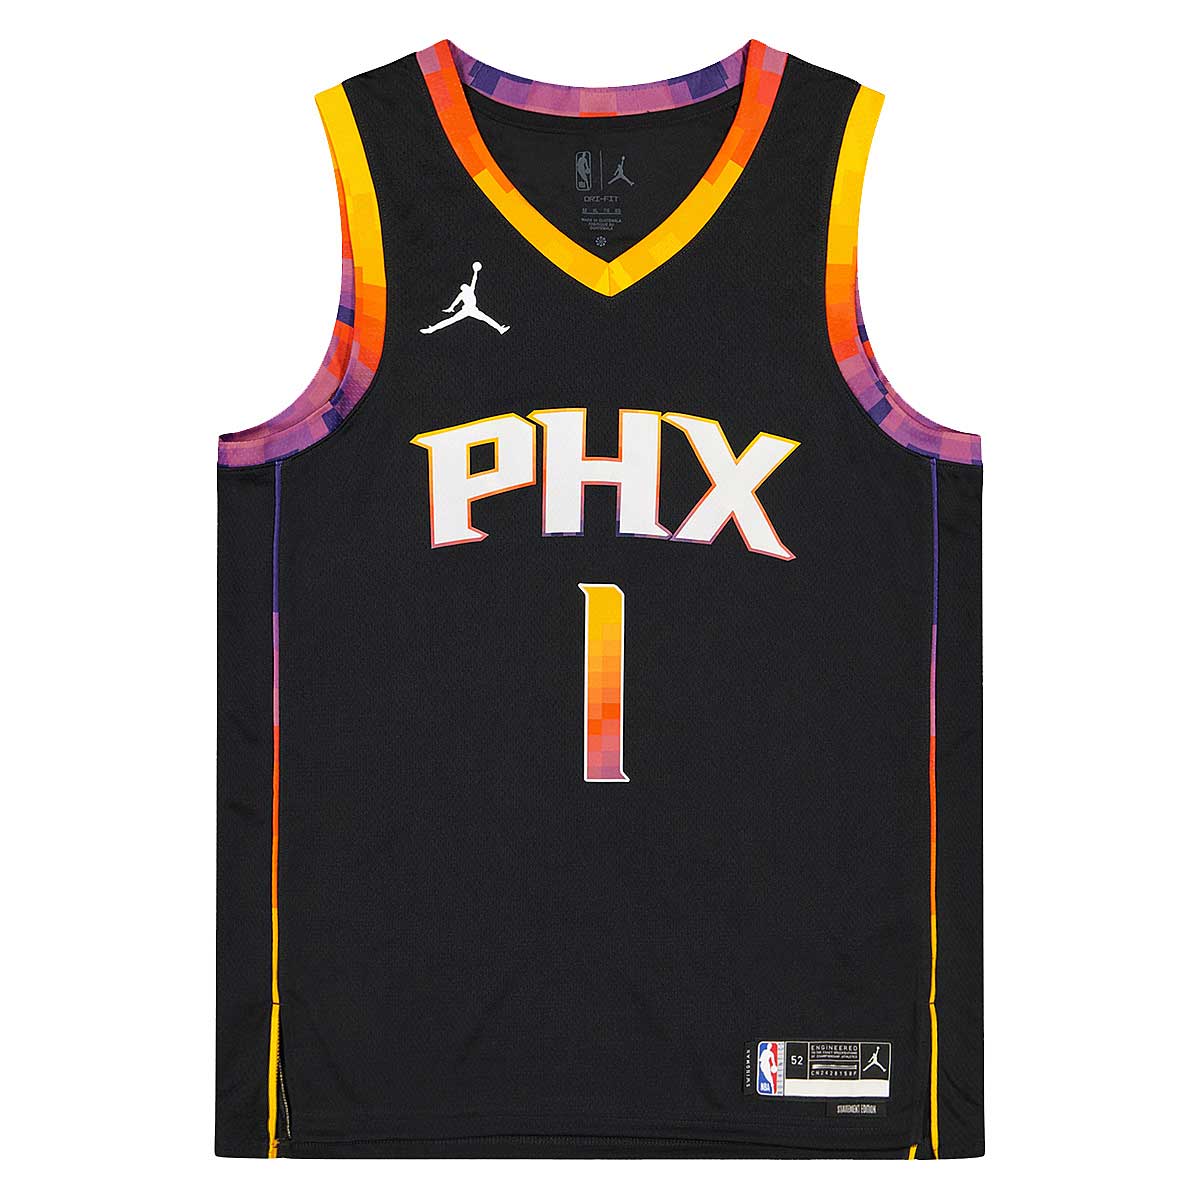 Phoenix Suns Statement Edition Men's Jordan Dri-FIT NBA Short-Sleeve Top.